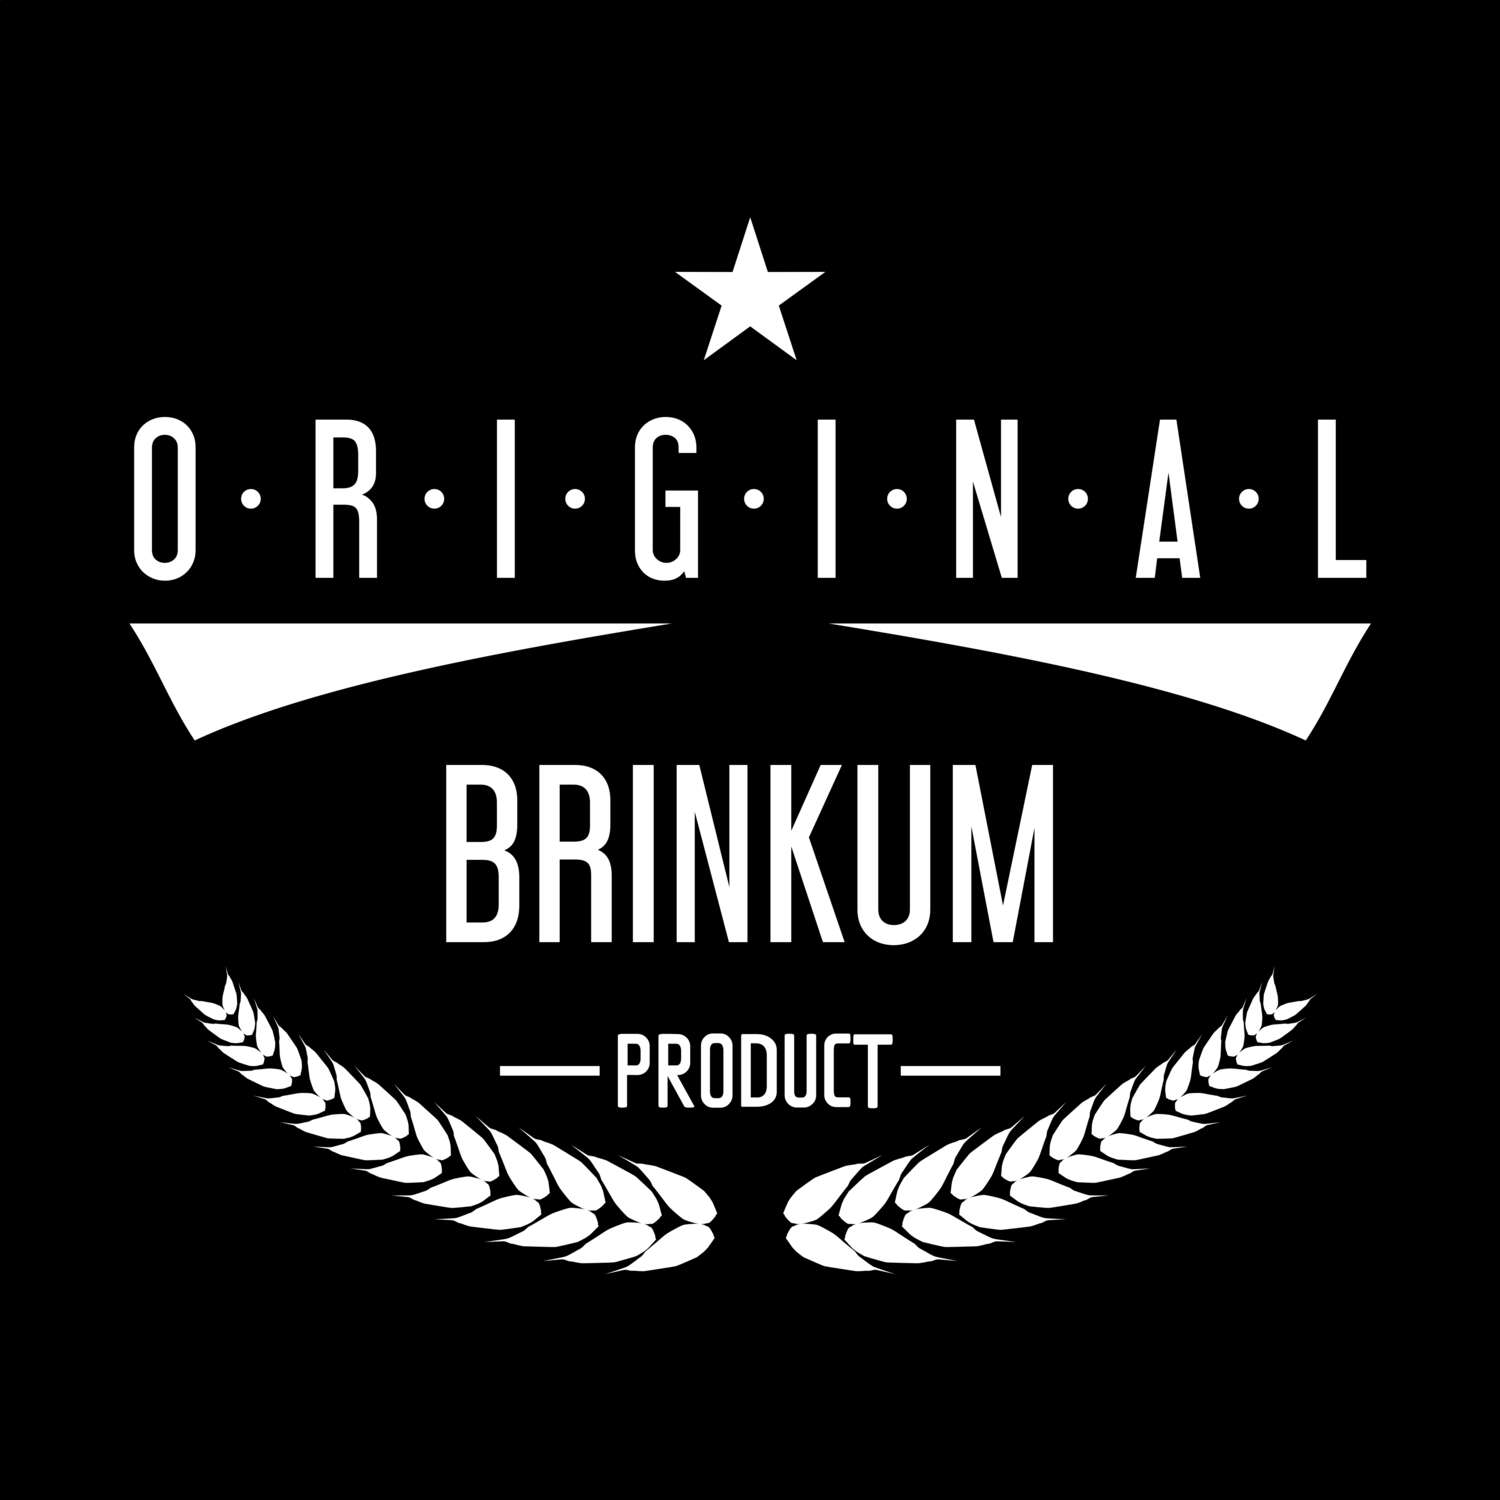 Brinkum T-Shirt »Original Product«